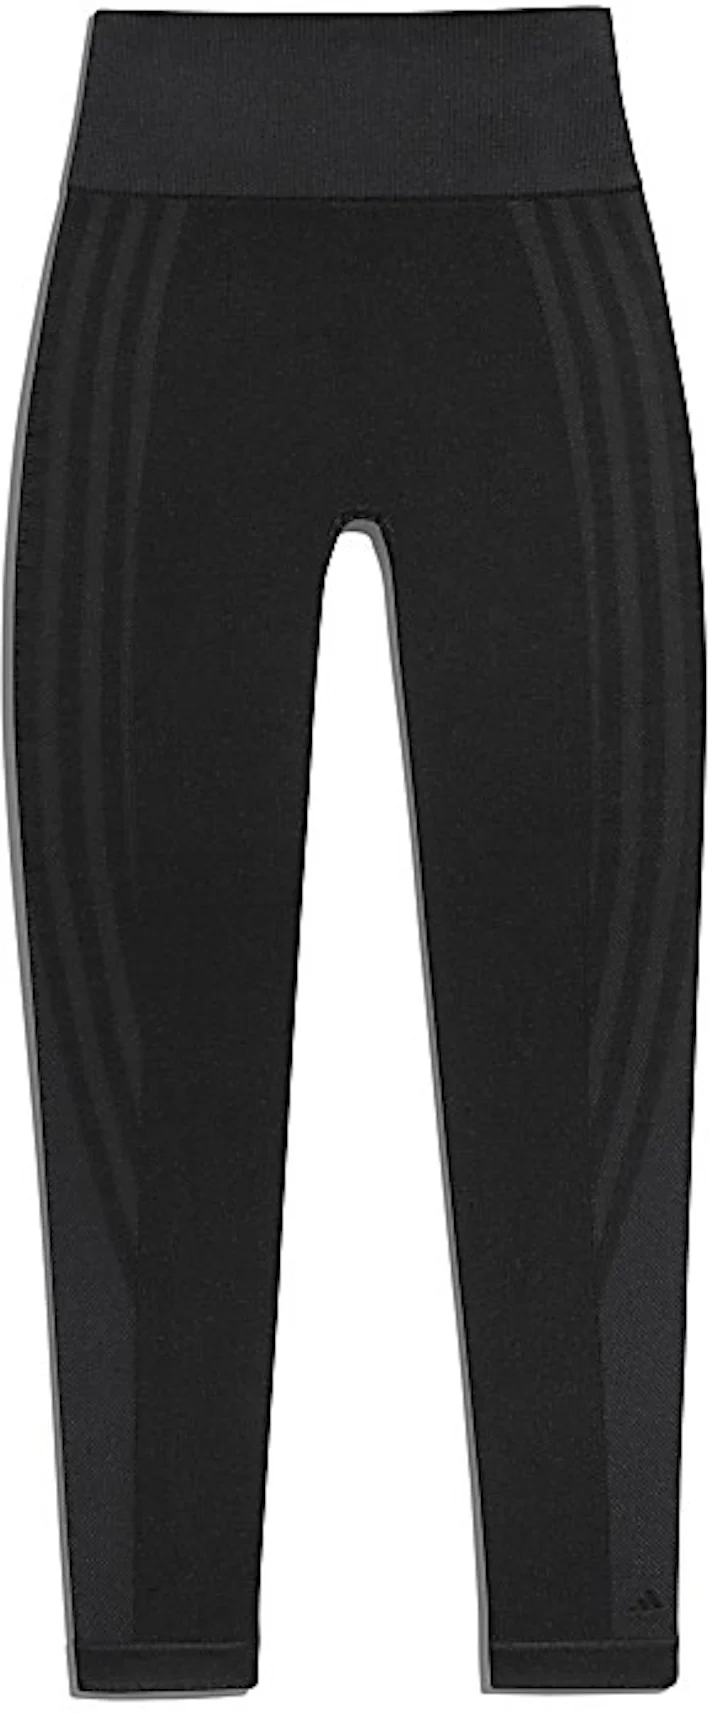 adidas Ivy Park Circular Knit 3-Stripes Tights Black - FW20 - US